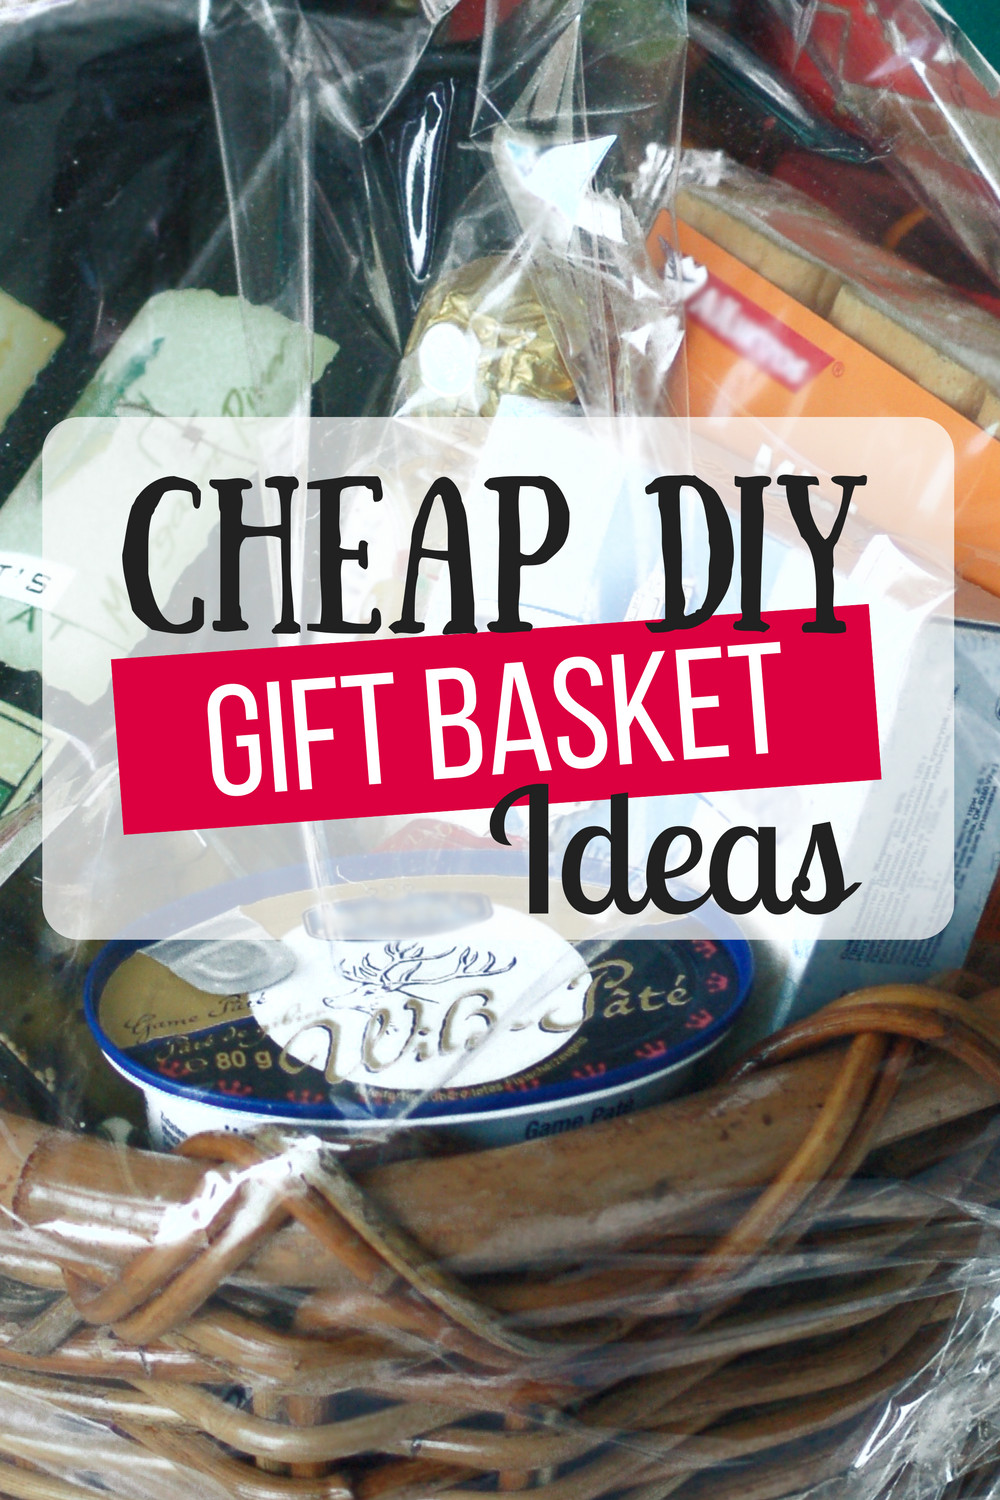 Homemade Gift Baskets Ideas
 Cheap DIY Gift Baskets The Busy Bud er